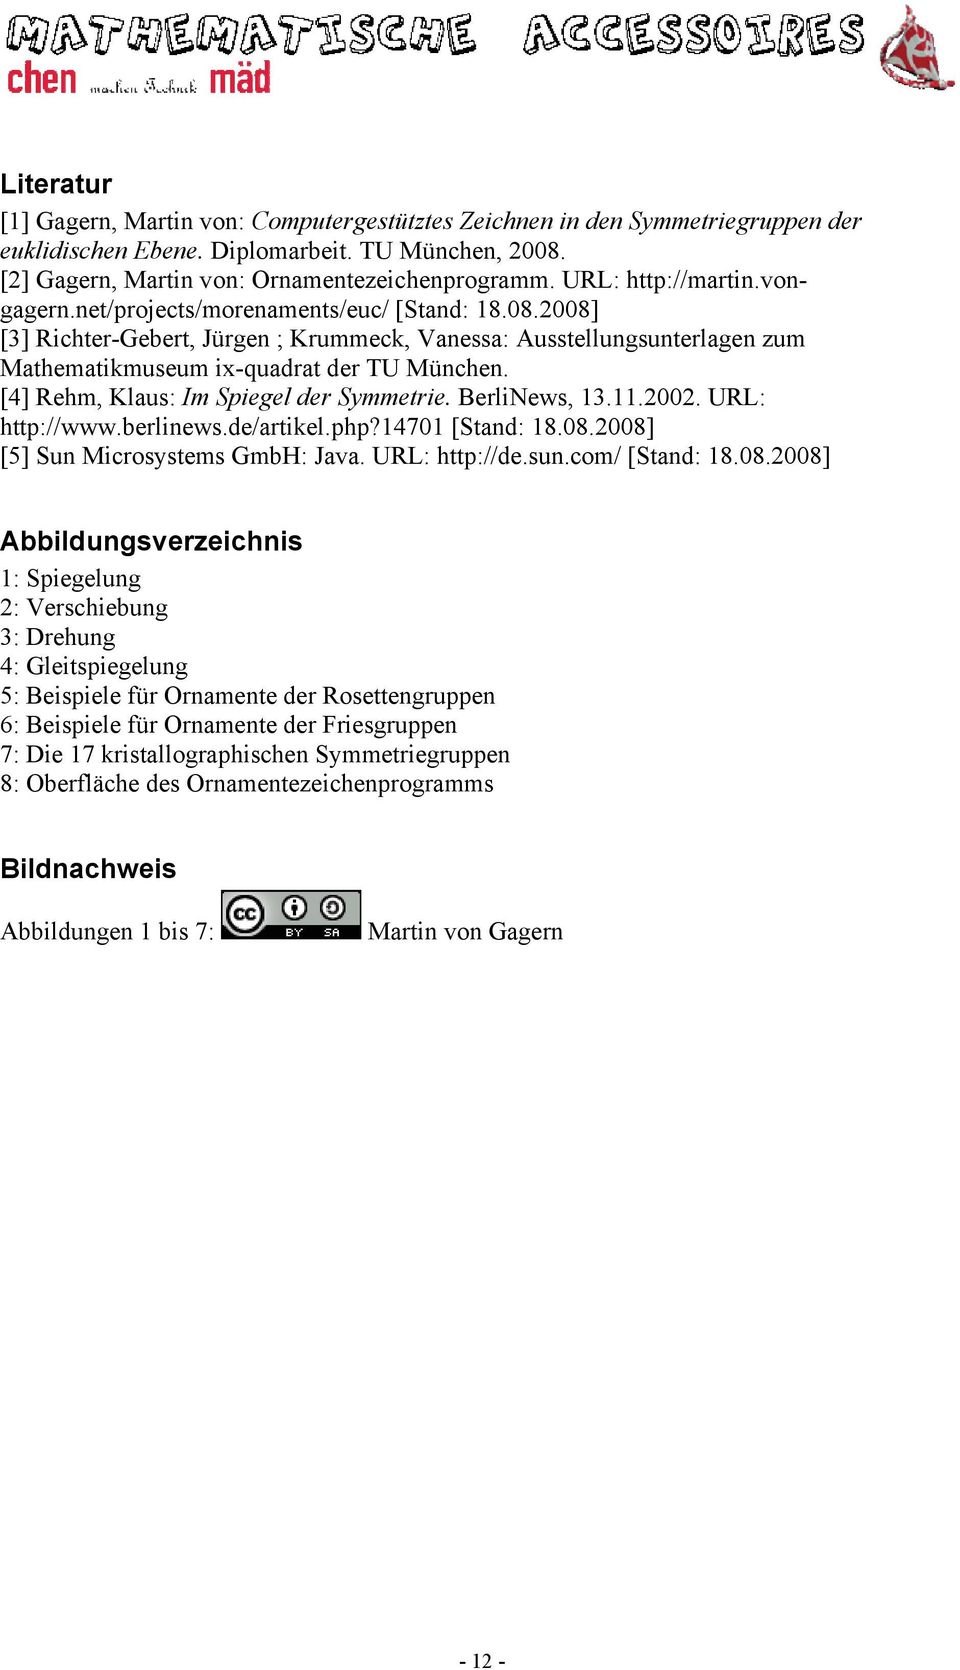 [4] Rehm, Klaus: Im Spiegel der Symmetrie. BerliNews, 13.11.2002. URL: http://www.berlinews.de/artikel.php?14701 [Stand: 18.08.2008] [5] Sun Microsystems GmbH: Java. URL: http://de.sun.